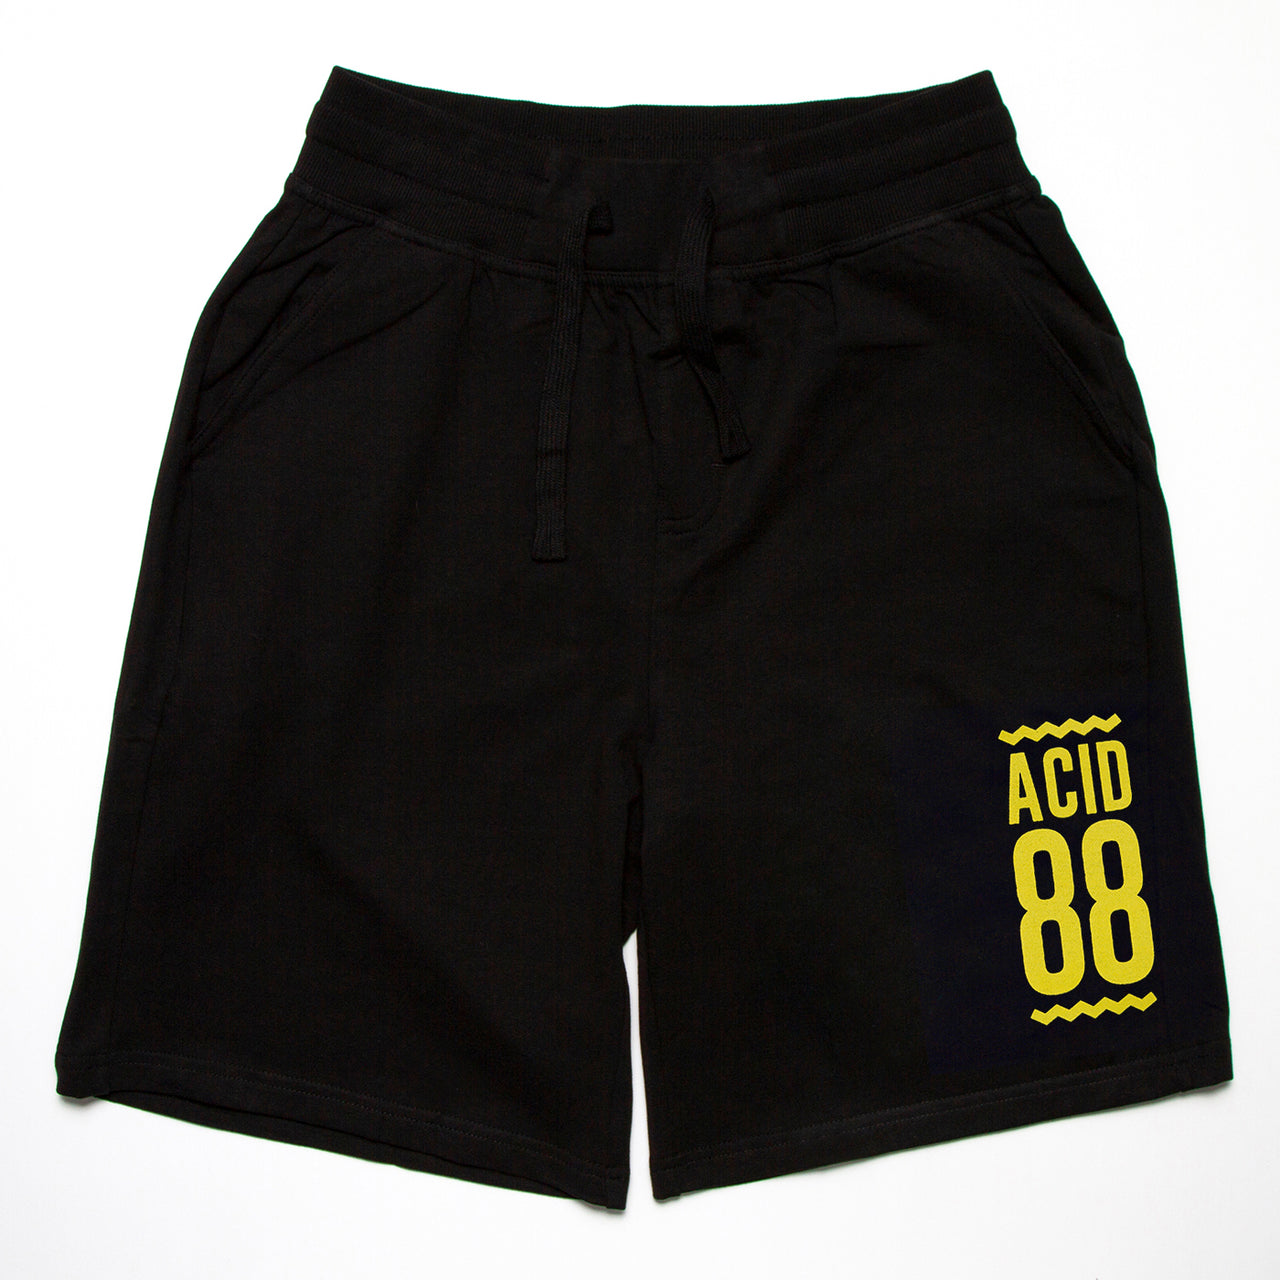 Acid 88 - Jersey Shorts - Black